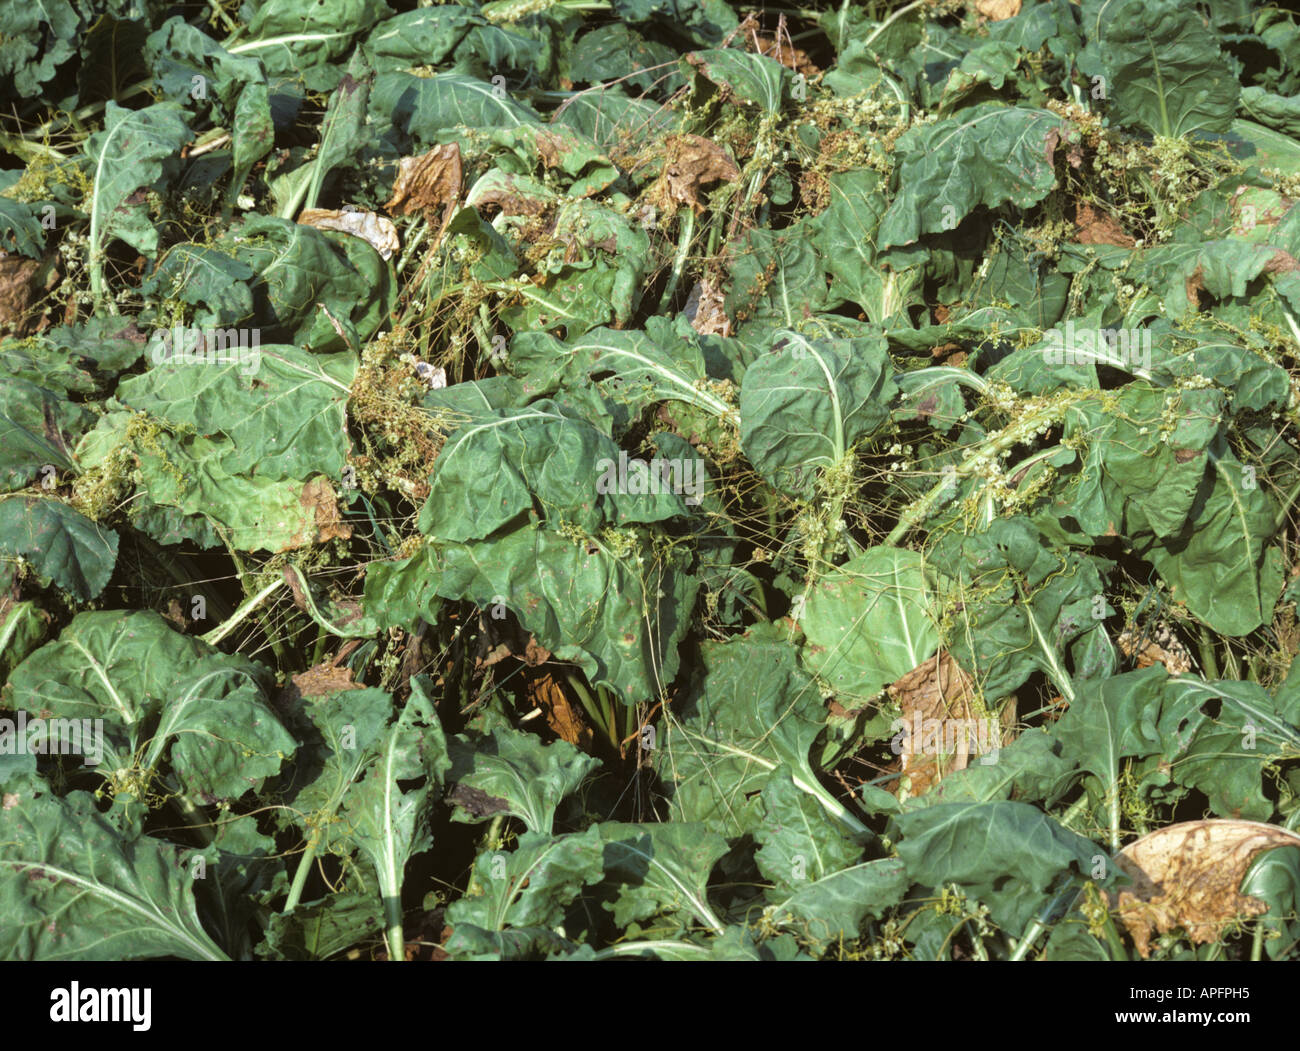 Dodder or strangleweed Cuscuta epithymum parasitic weed on mature sugar beet Greece Stock Photo